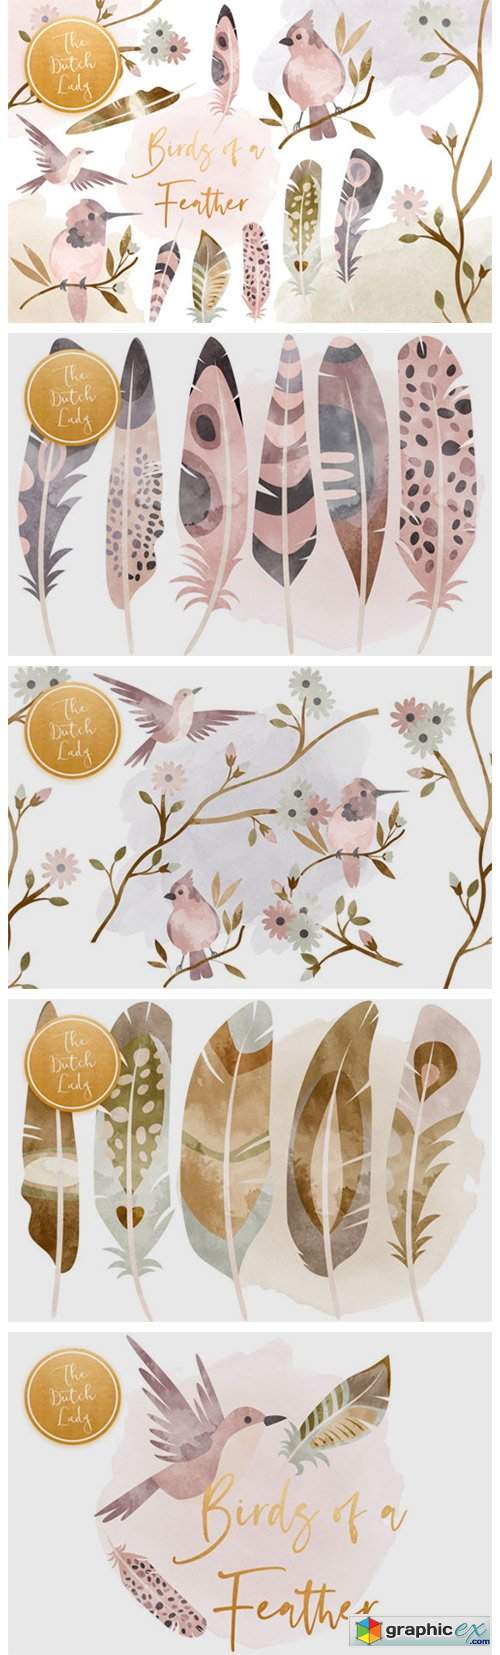  Birds & Feathers Clipart Set 